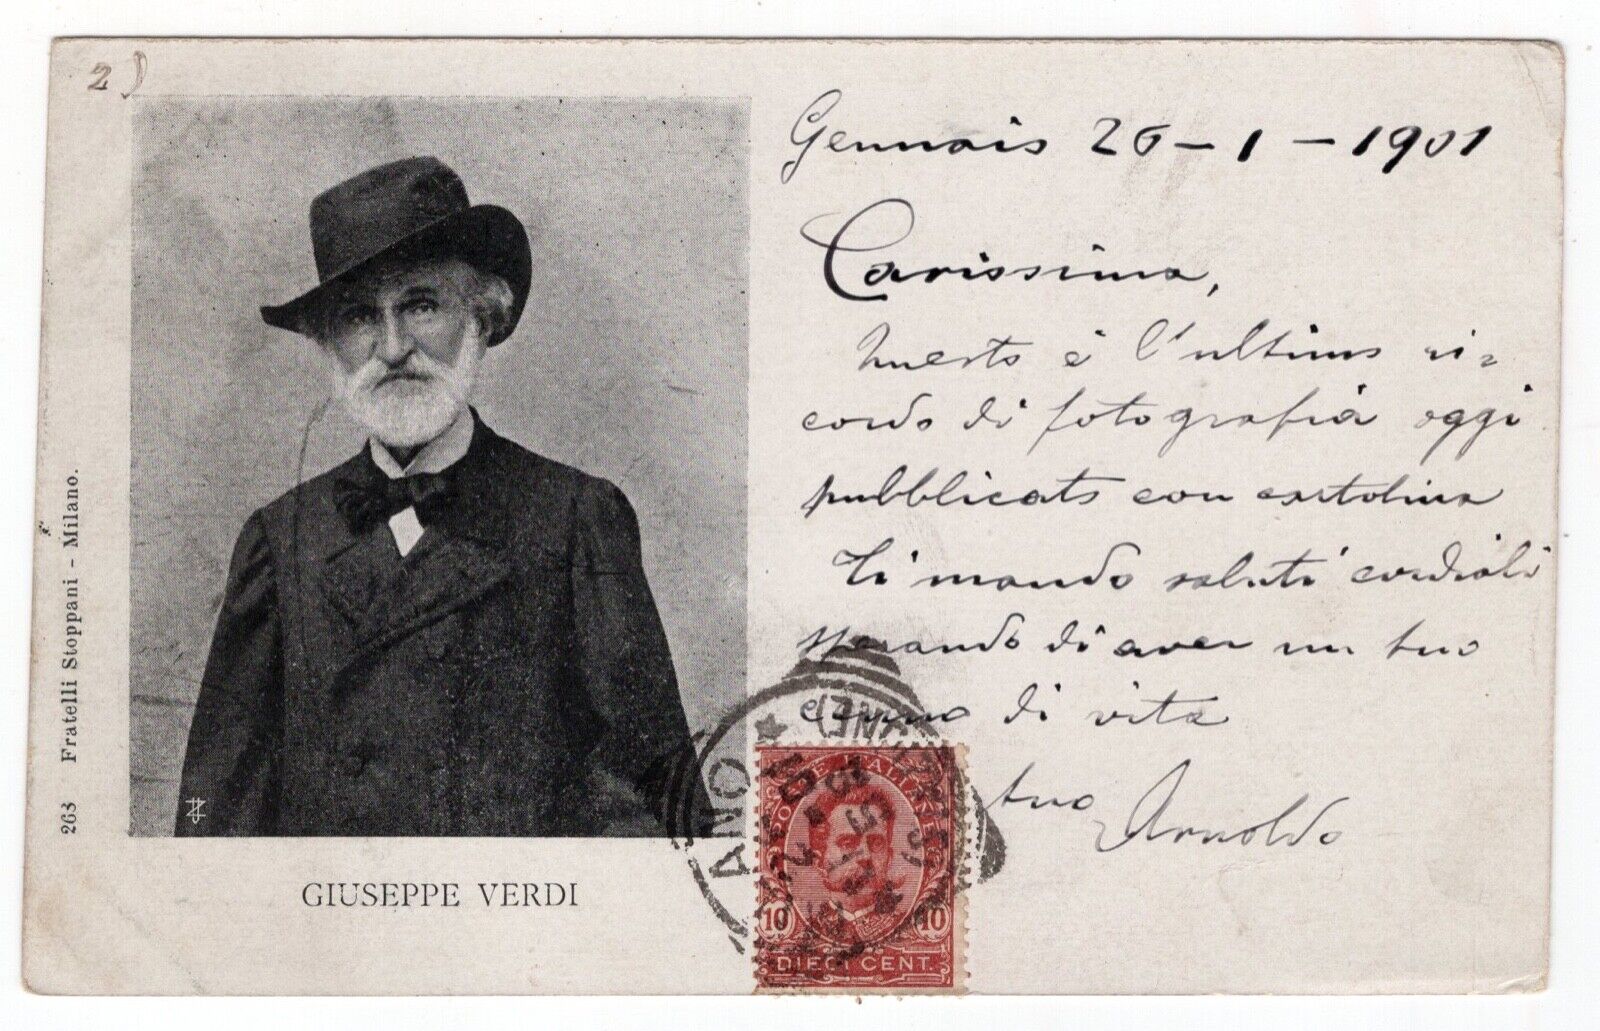 GIUSEPPE VERDI POSTCARD POSTALLY USED THE DAY BEFORE HIS DEATH, JANUARY 26, 1901